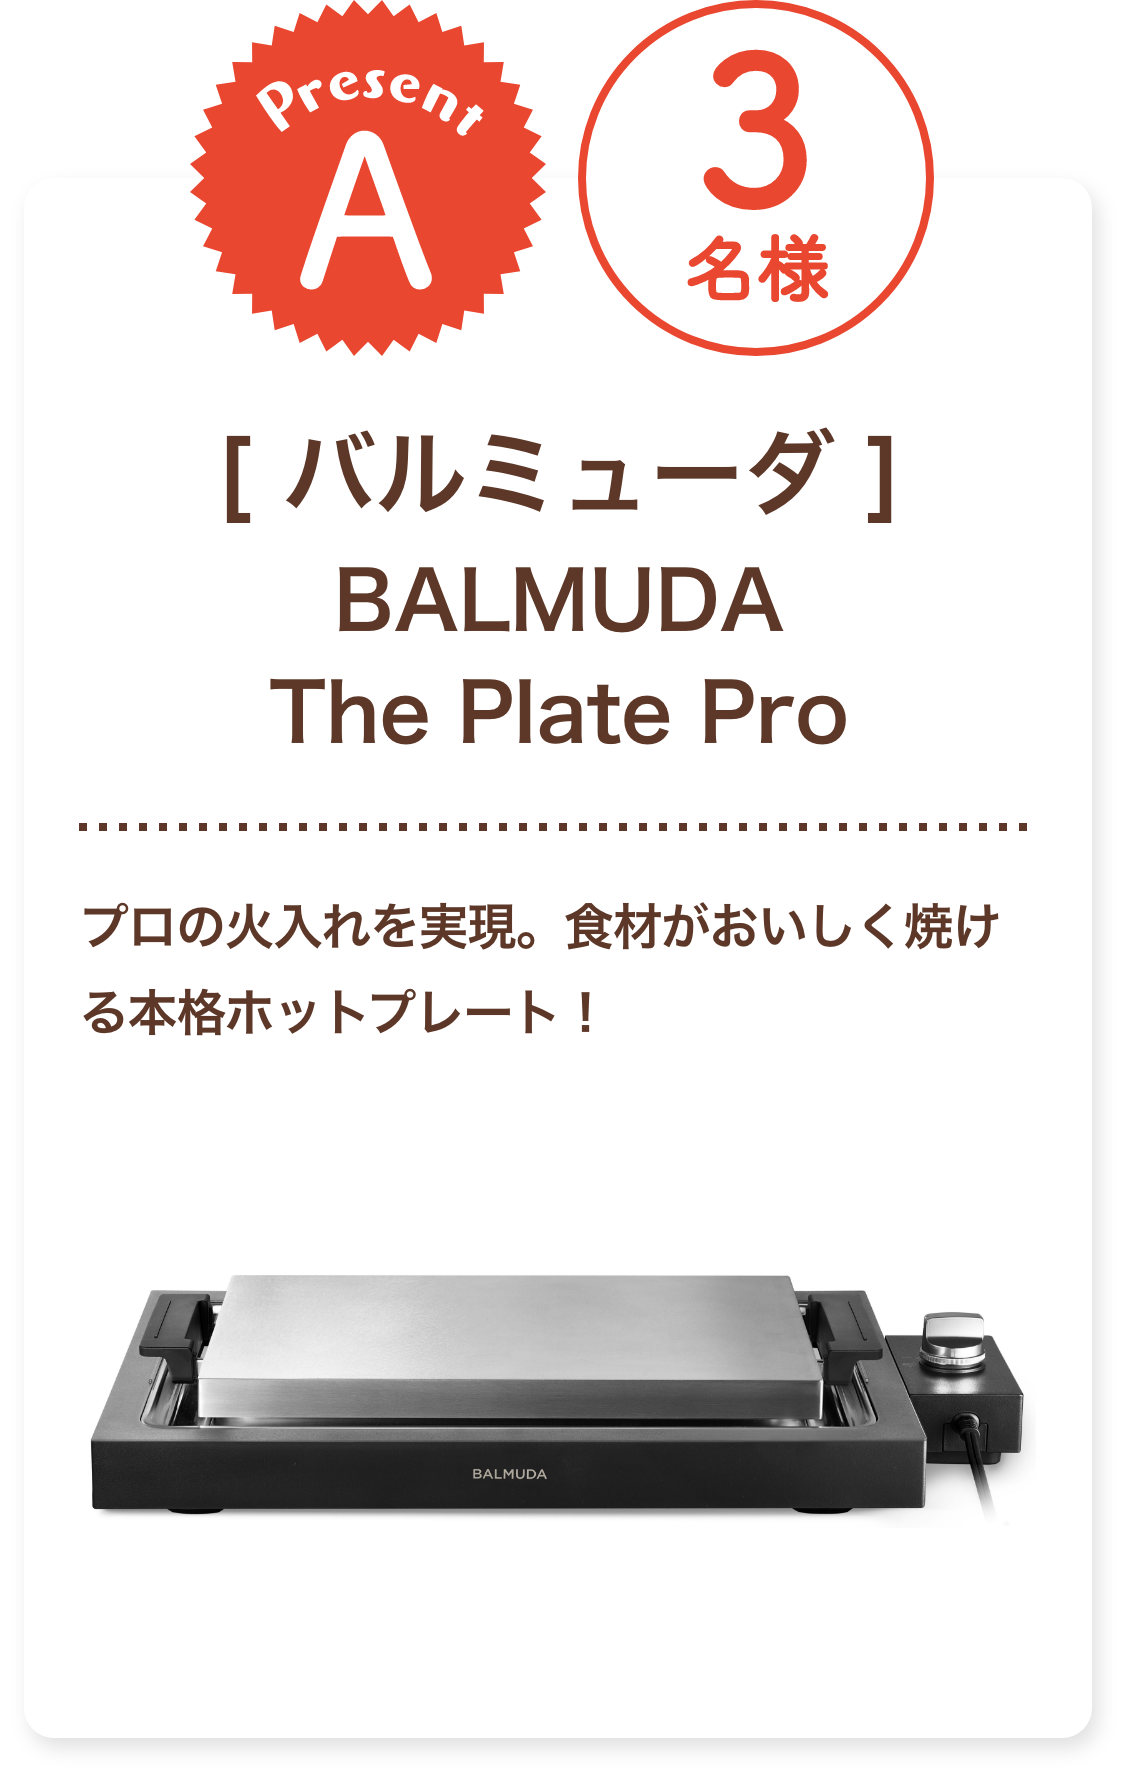 A賞:バルミューダ 「BALMUDA The Plate Pro」3名様